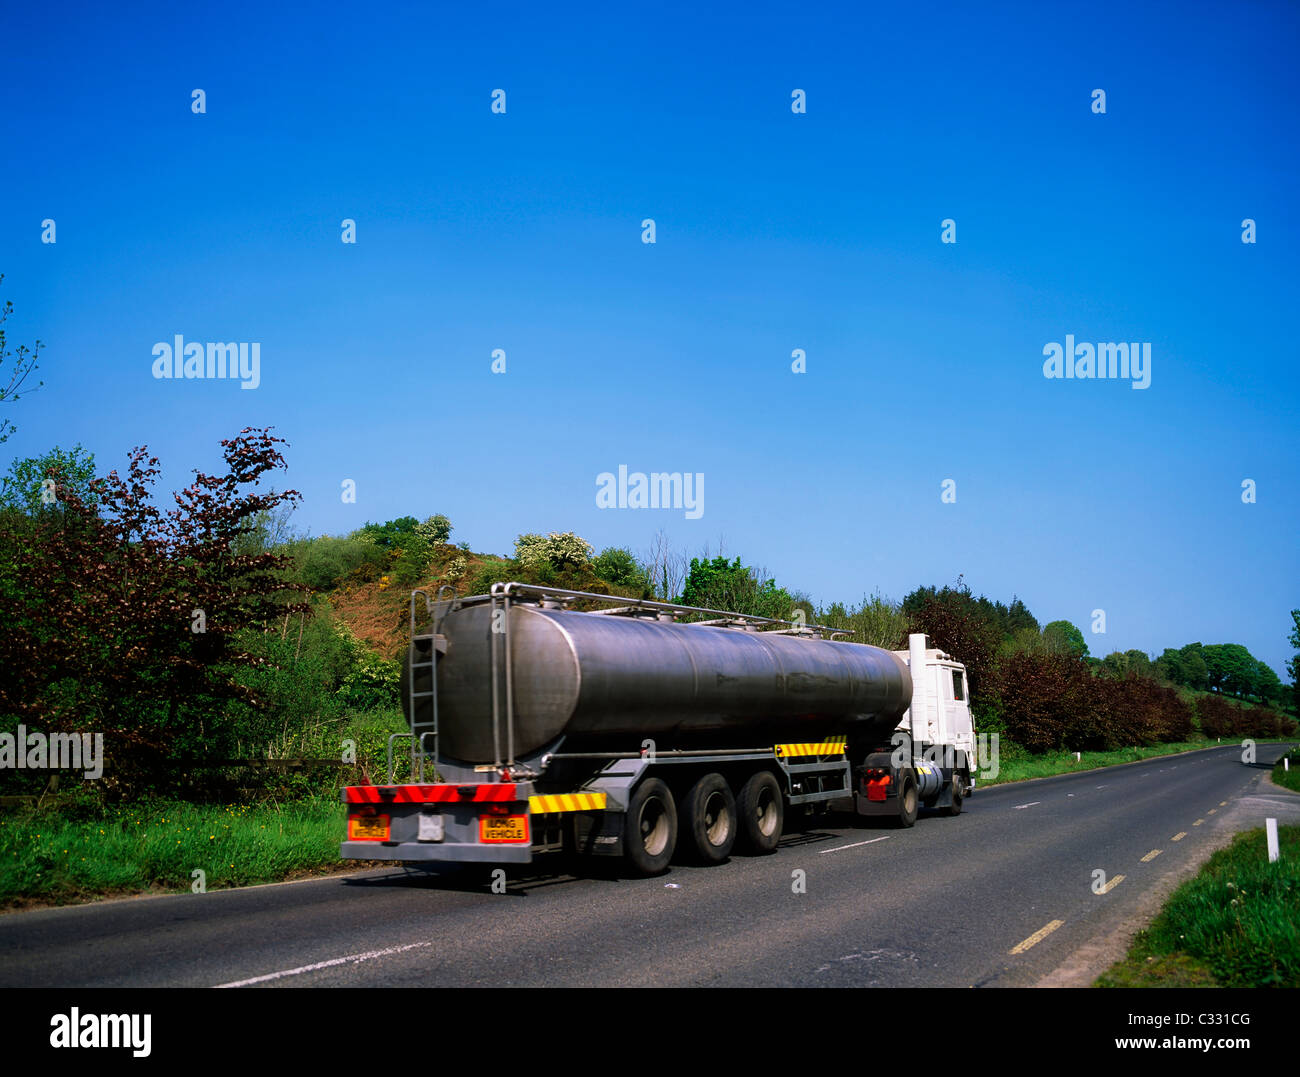 Road In Co Tipperary, Ireland, Milk Tanker Stock Photo